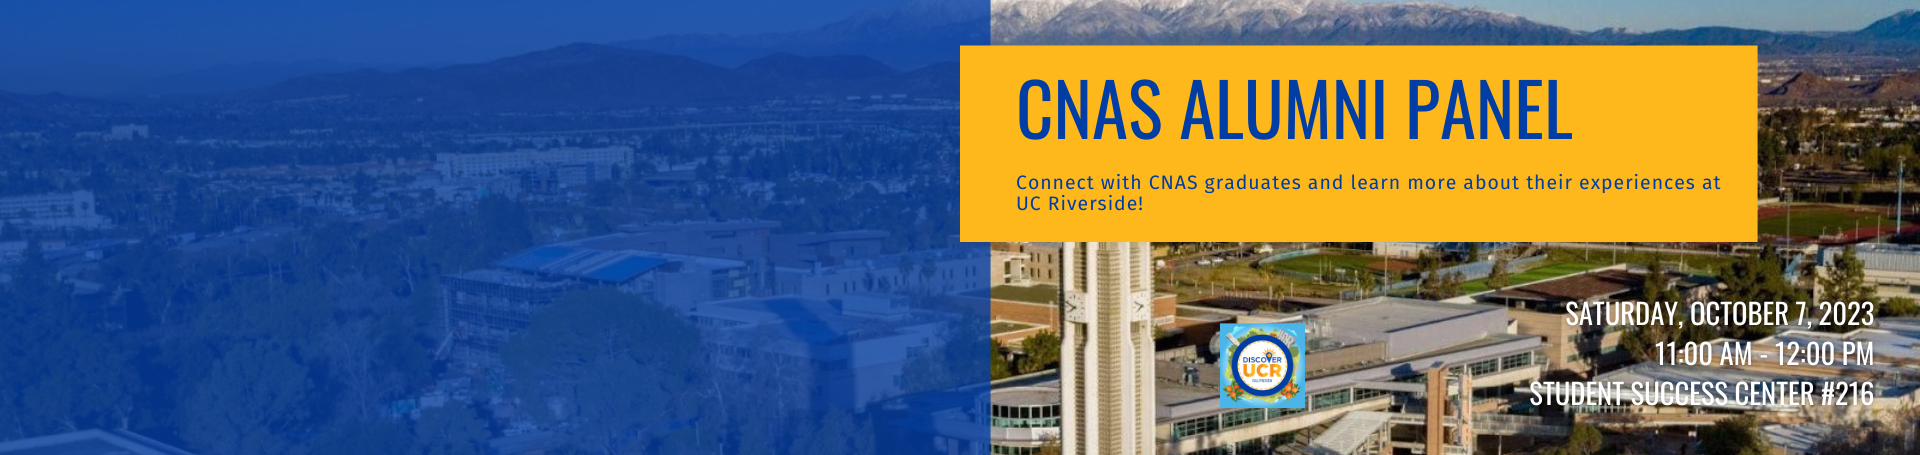 CNAS Alumni Panel at Discover UCR